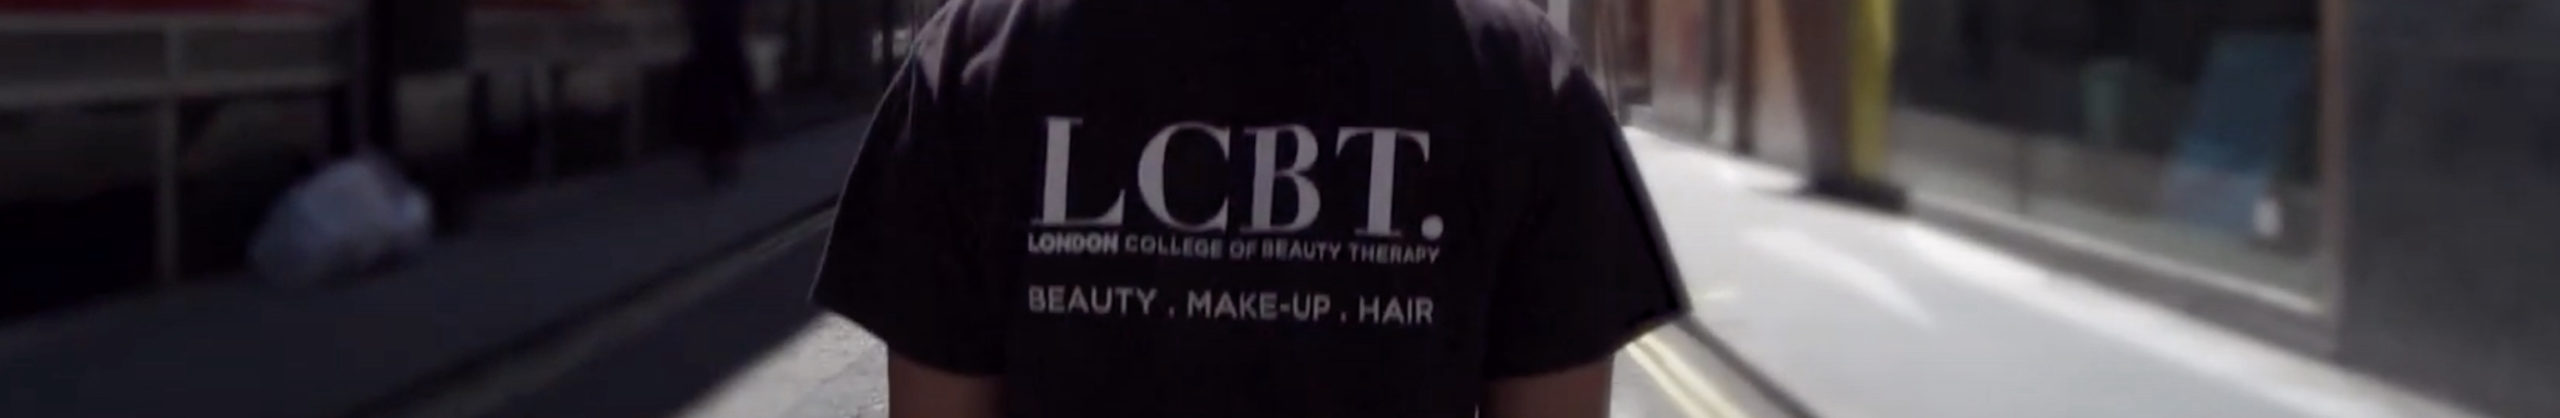 LCBT shirt with logo